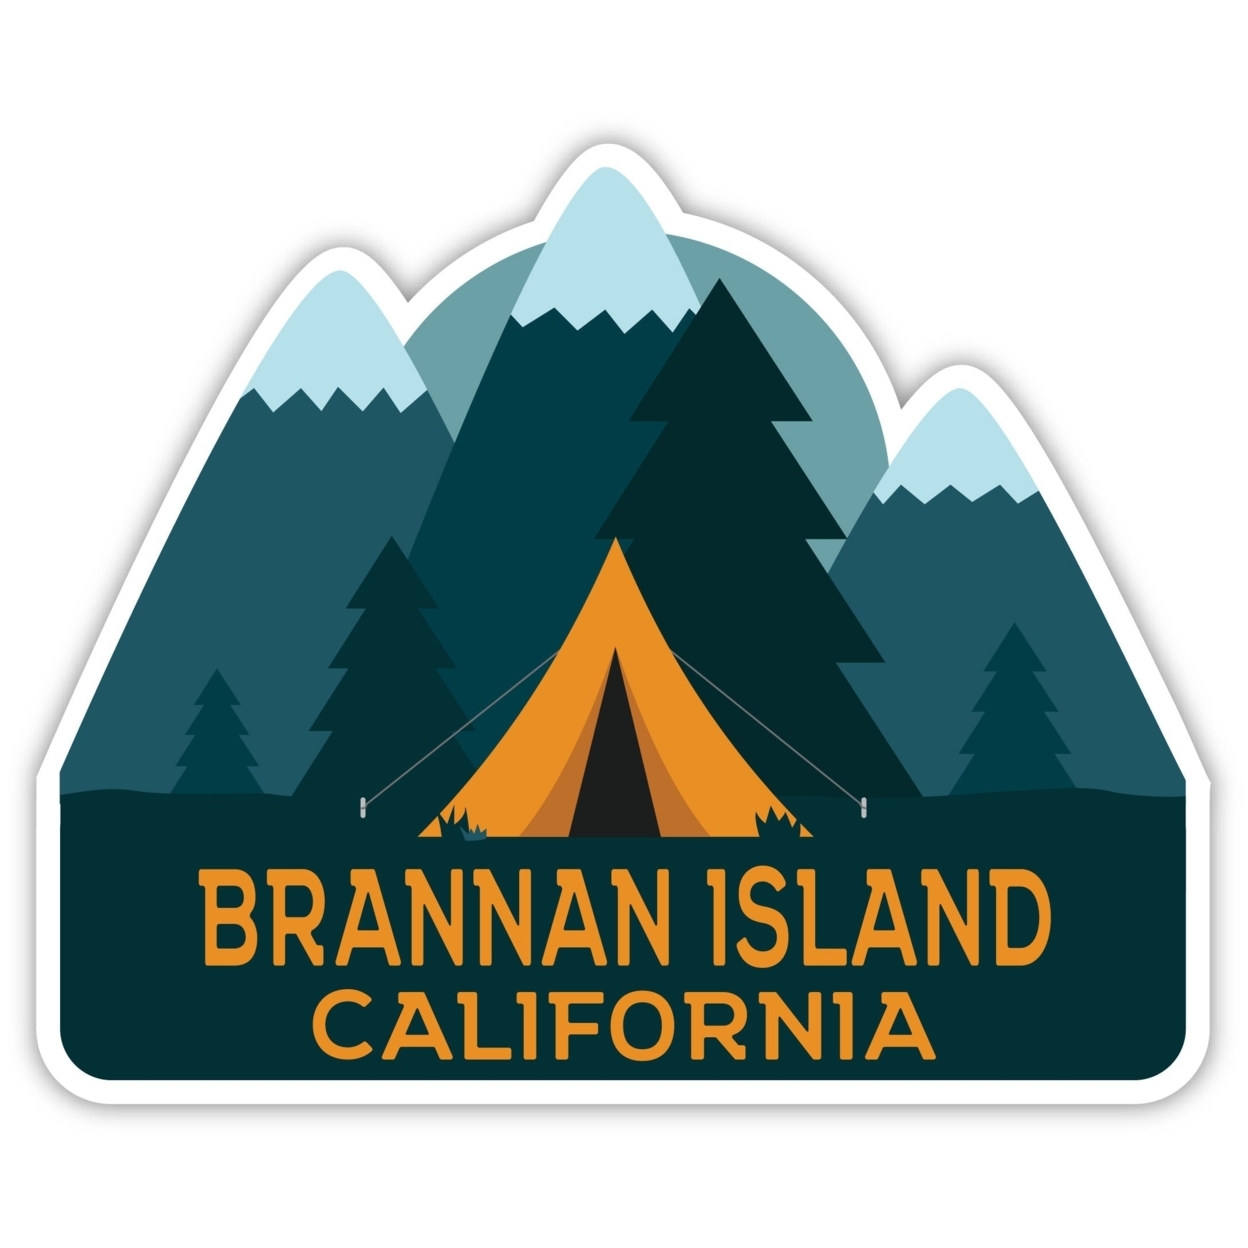 Brannan Island California Souvenir Decorative Stickers (Choose Theme And Size) - 4-Pack, 2-Inch, Tent